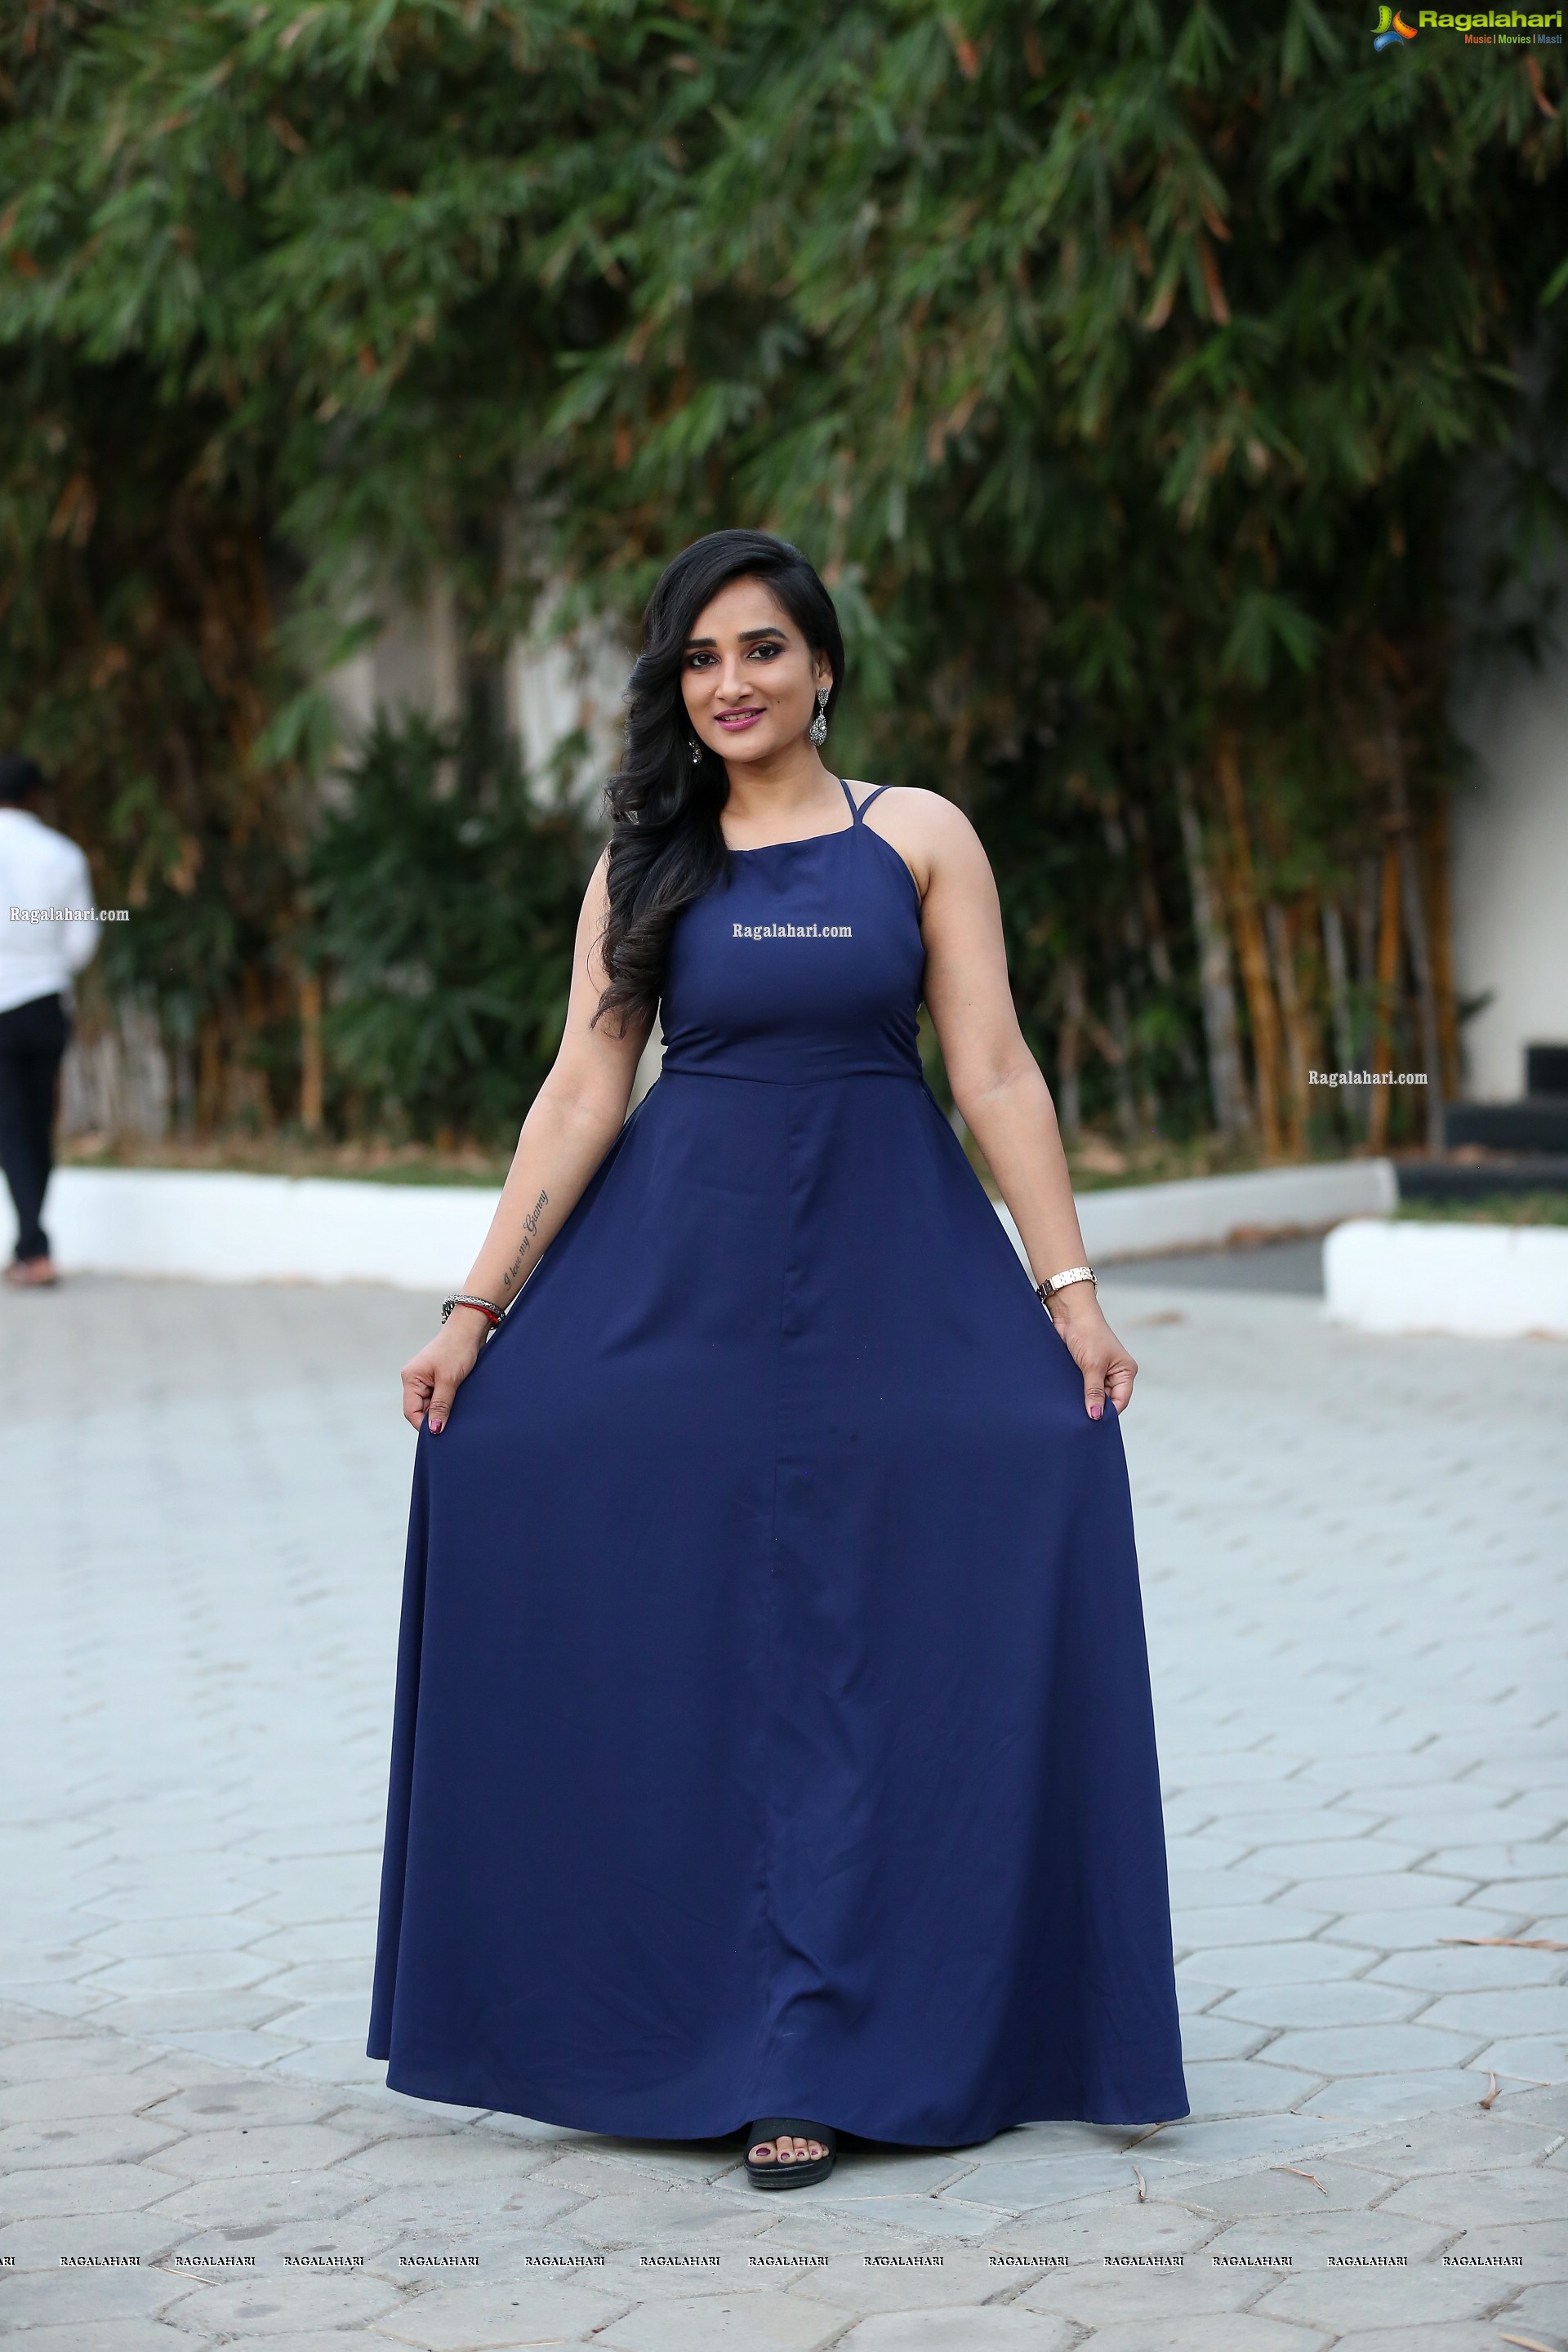 Madhu Krishnan in Navy Blue Spaghetti Strap Dress, HD Photo Gallery